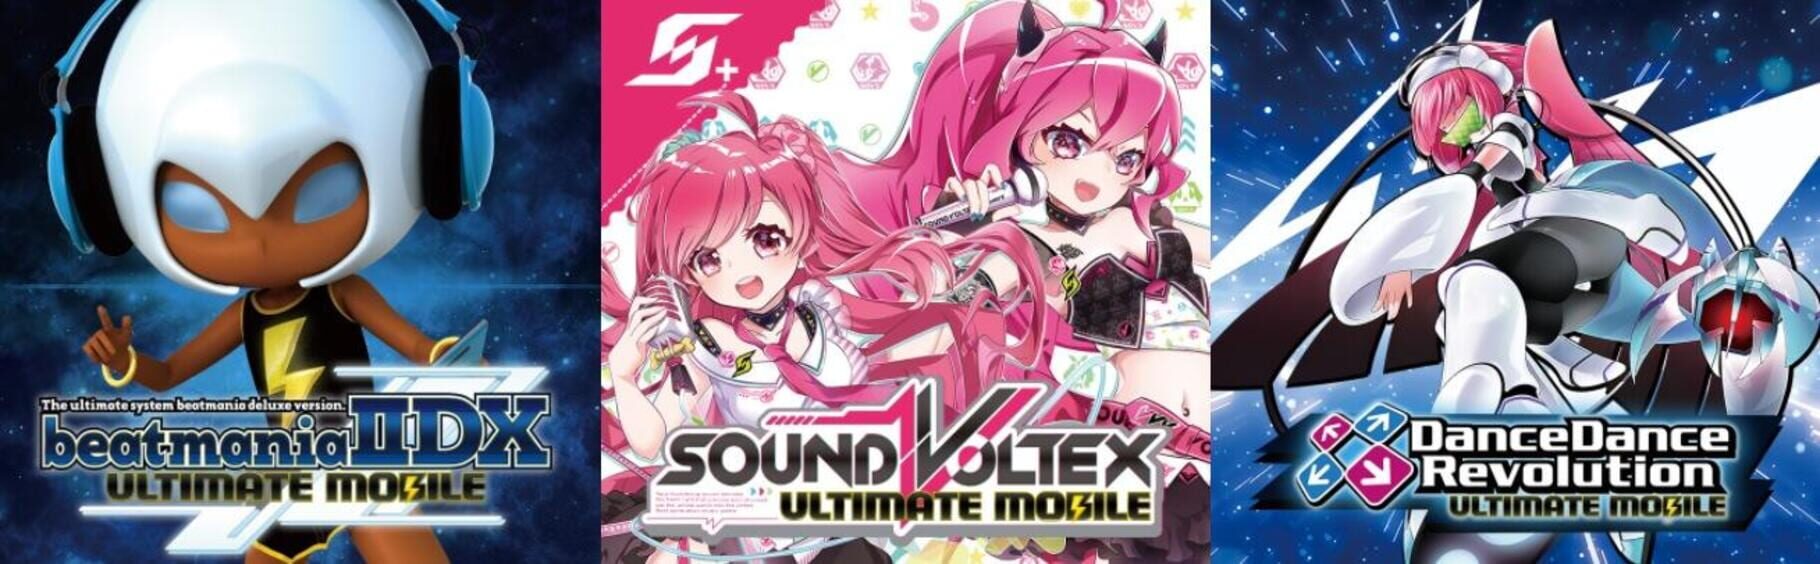 Sound Voltex: Ultimate Mobile